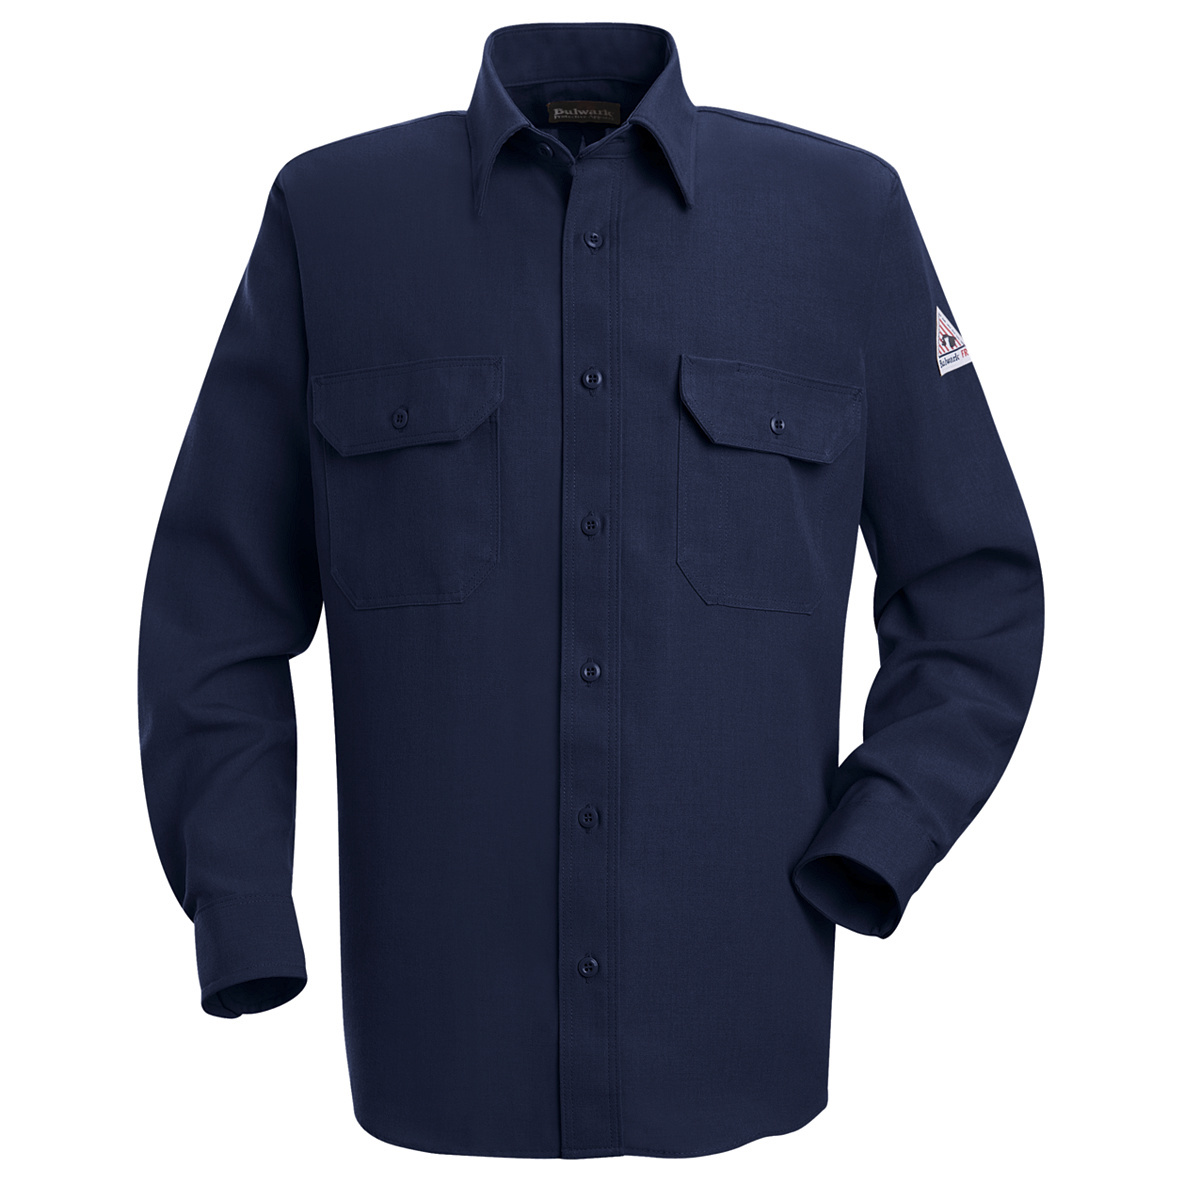 Bulwark® Medium Regular Navy Blue Nomex® IIIA/Nomex® Aramid/Kevlar® Aramid Flame Resistant Uniform Shirt With Button Front Closu